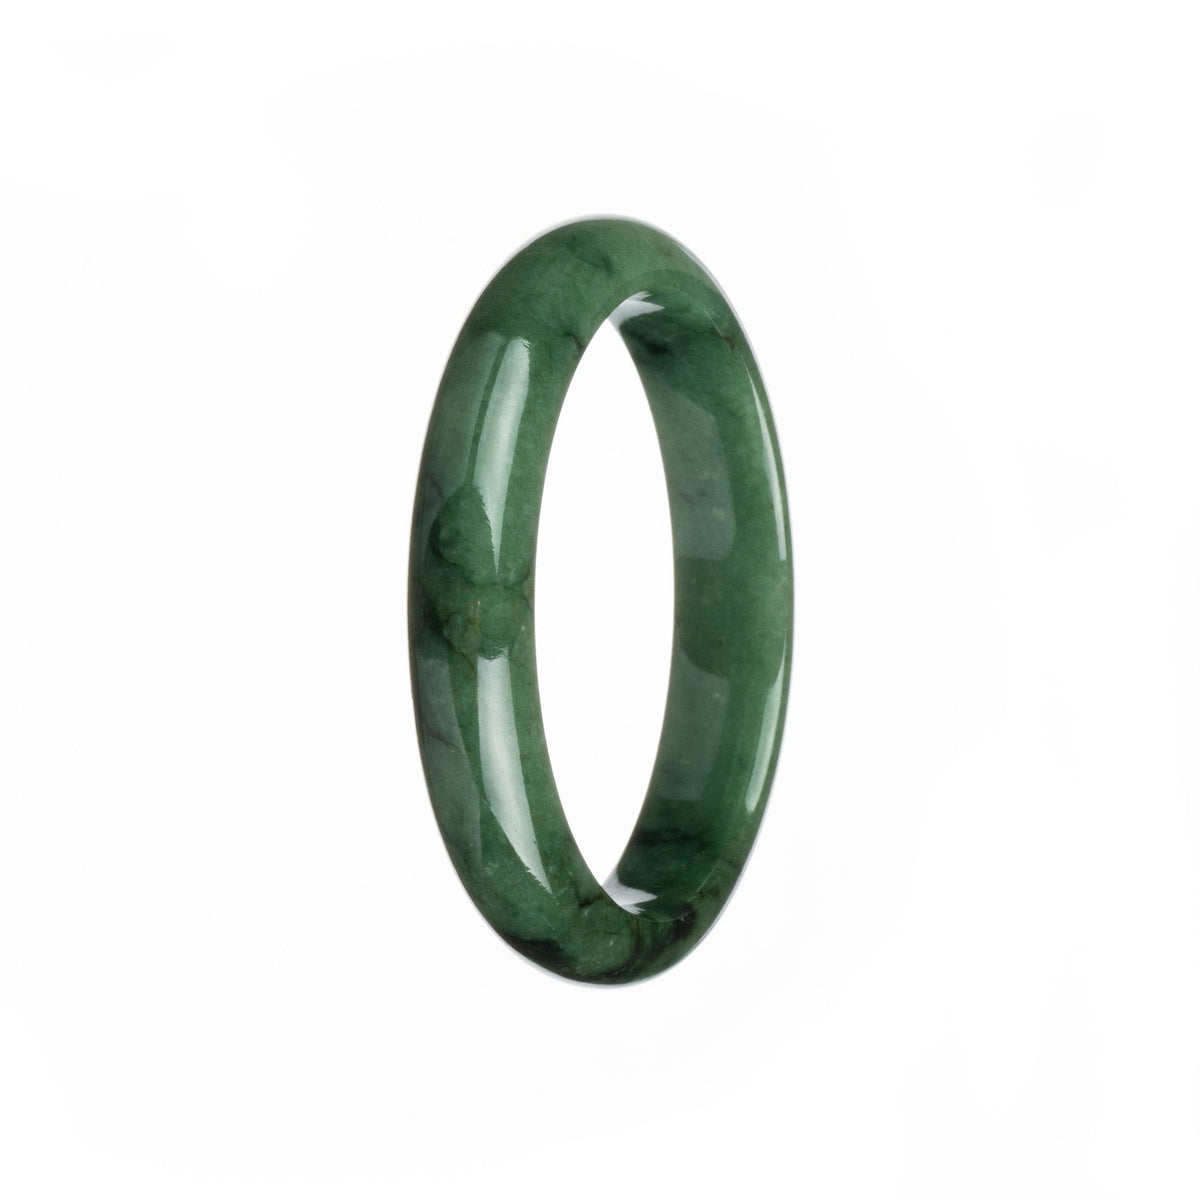 Genuine Grade A Deep Green Burma Jade Bangle - 57mm Half Moon